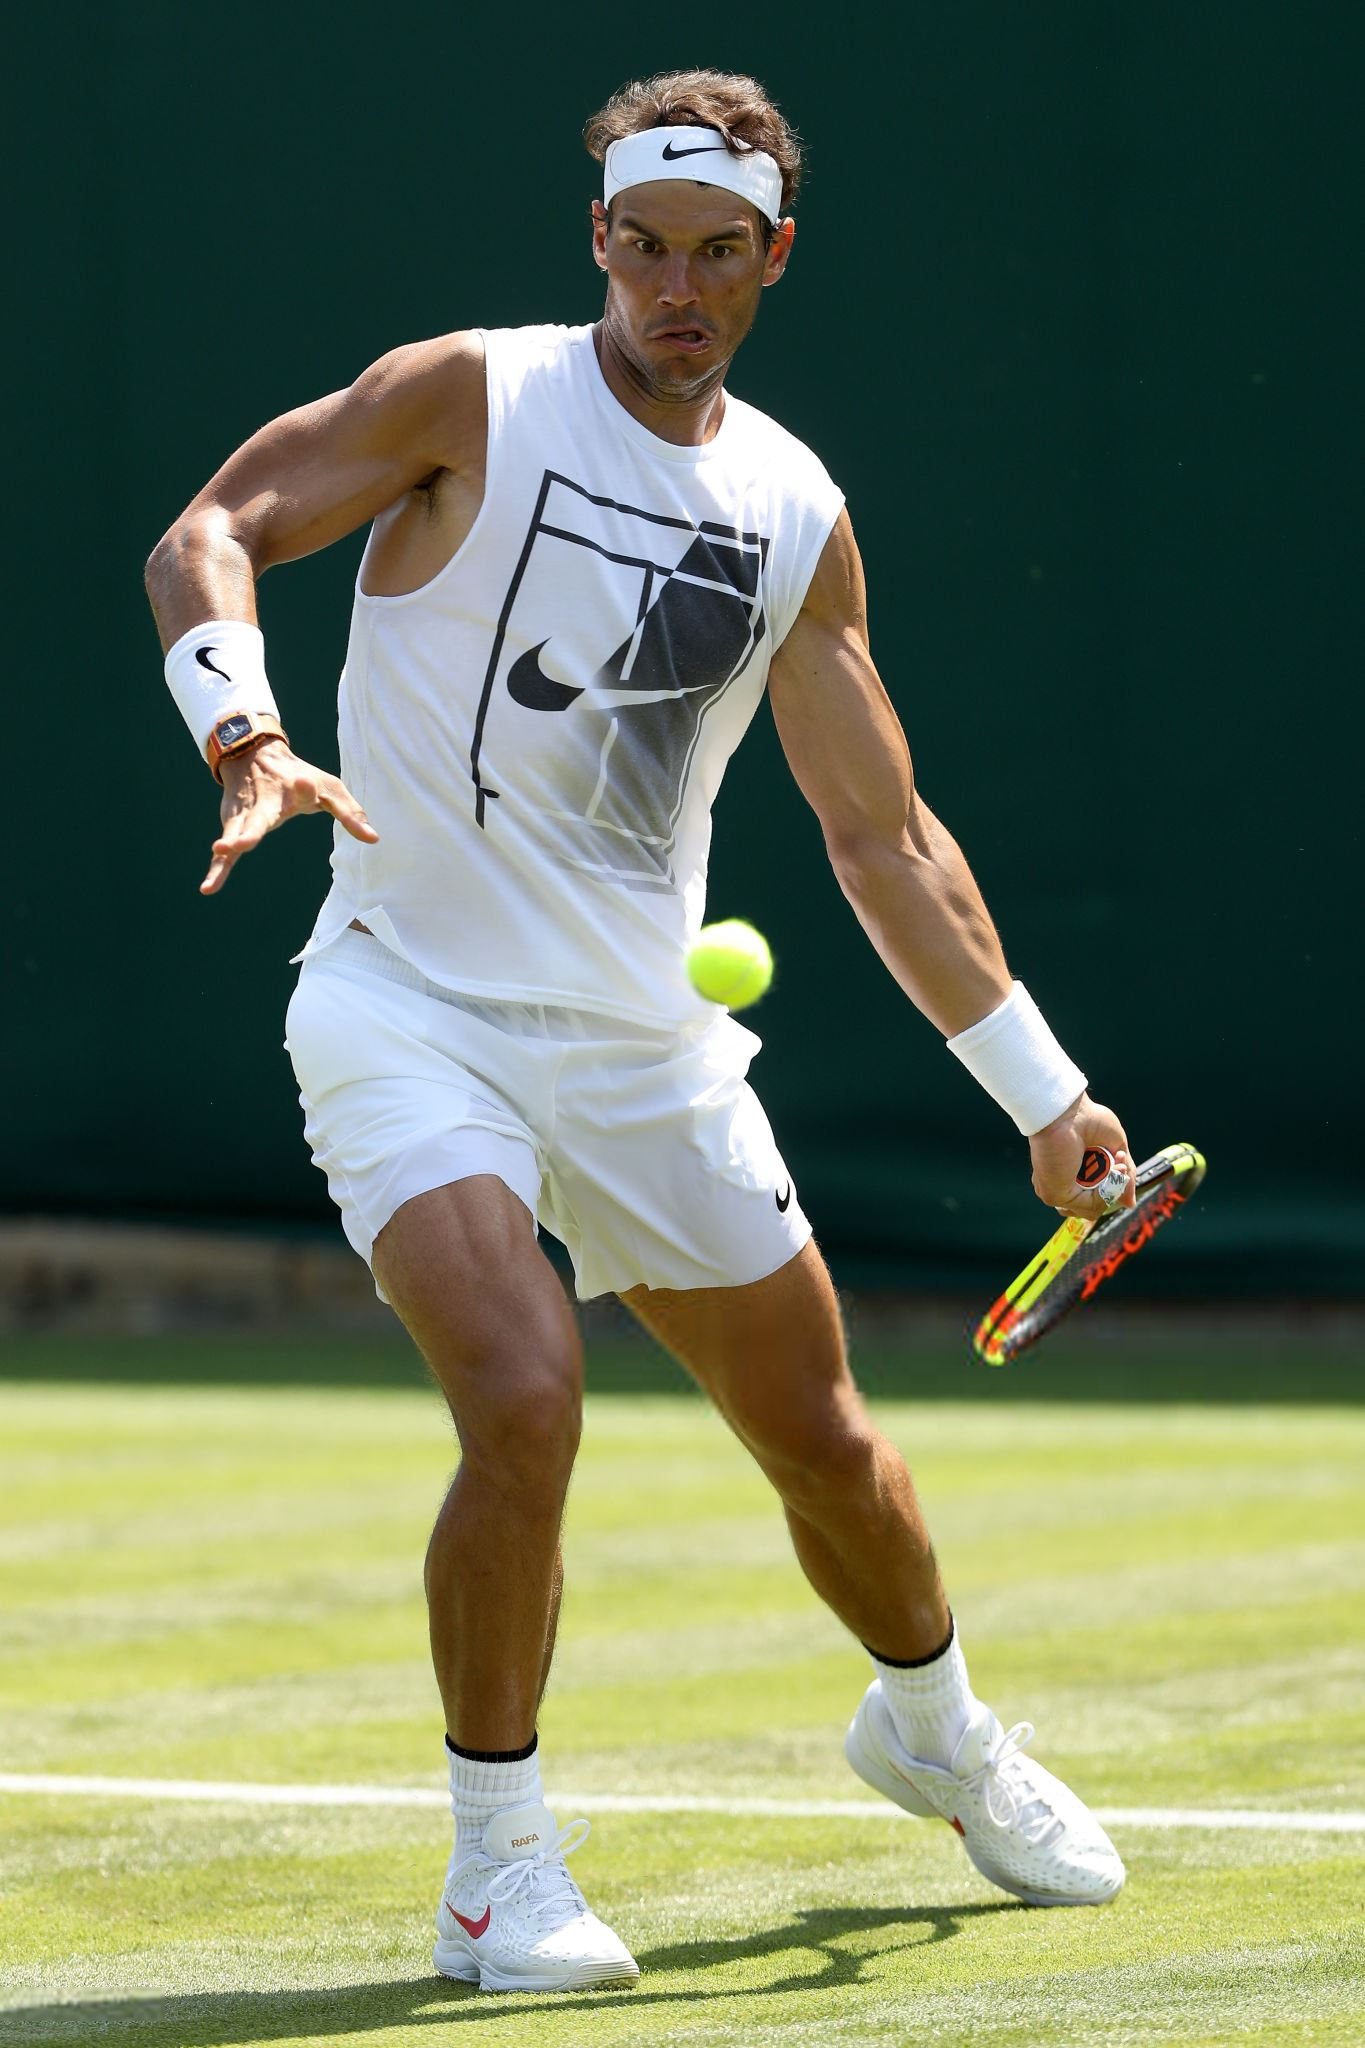 Wimbledon 2018: Thursday practice photos – Rafael Nadal Fans